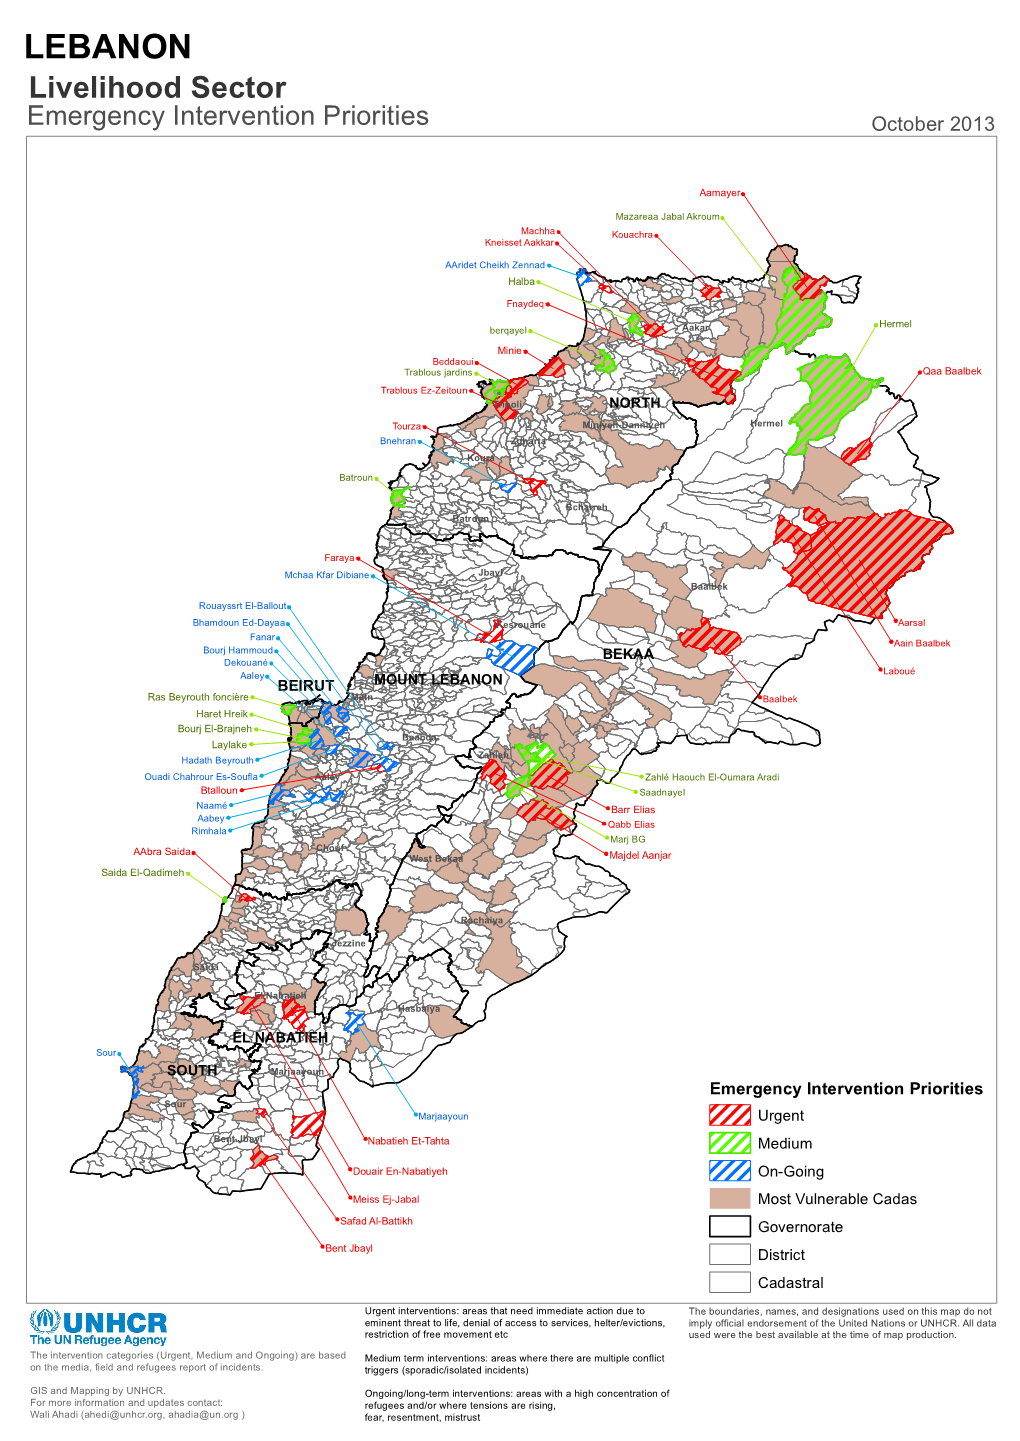 LEBANON Livelihood Sector Emergency Intervention Priorities October 2013